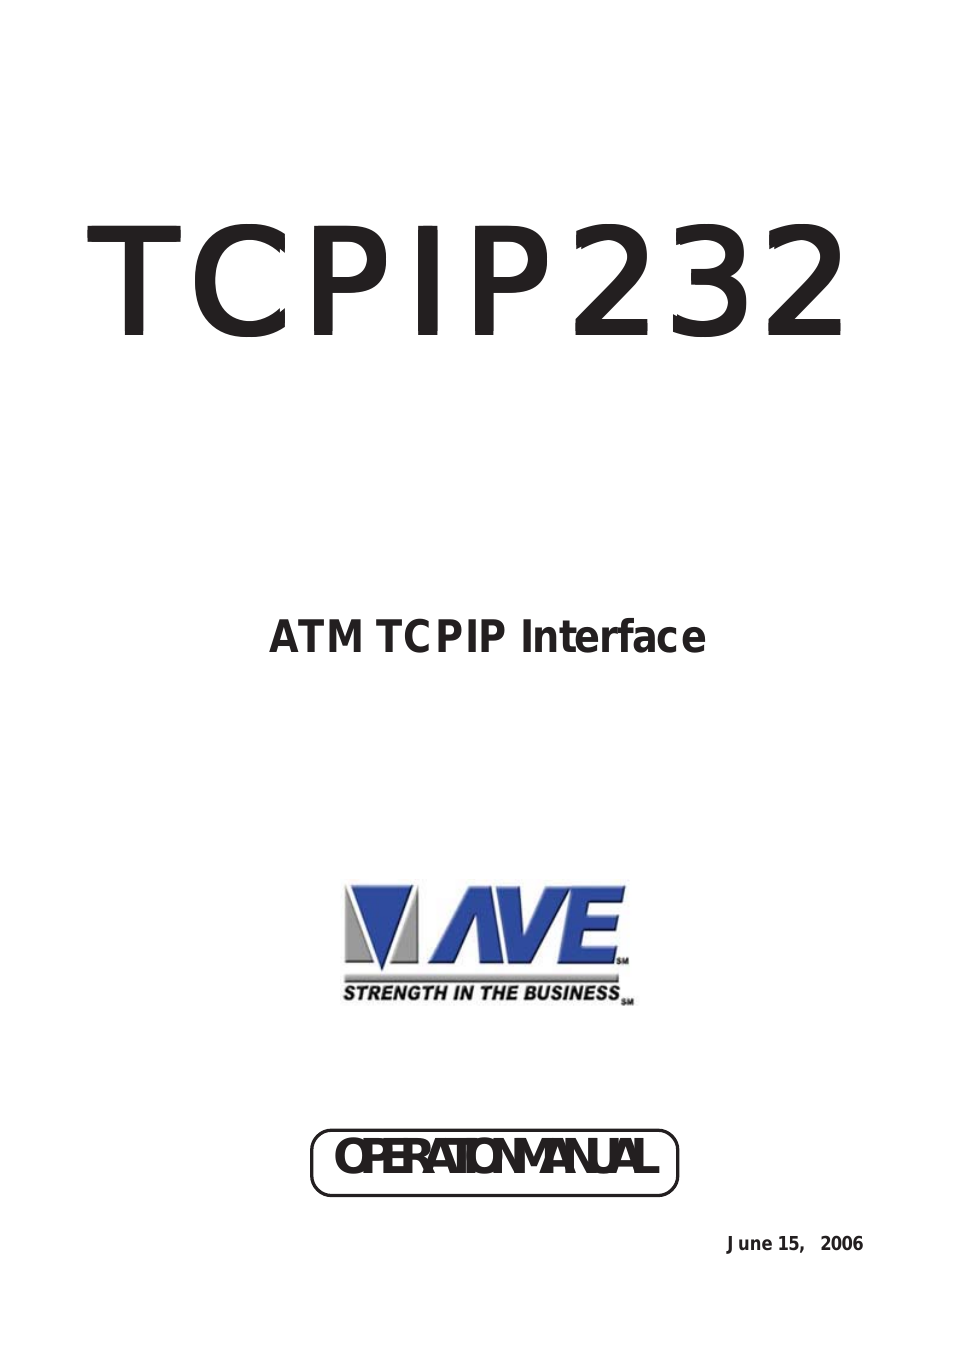 ATM Interface TCPIP232